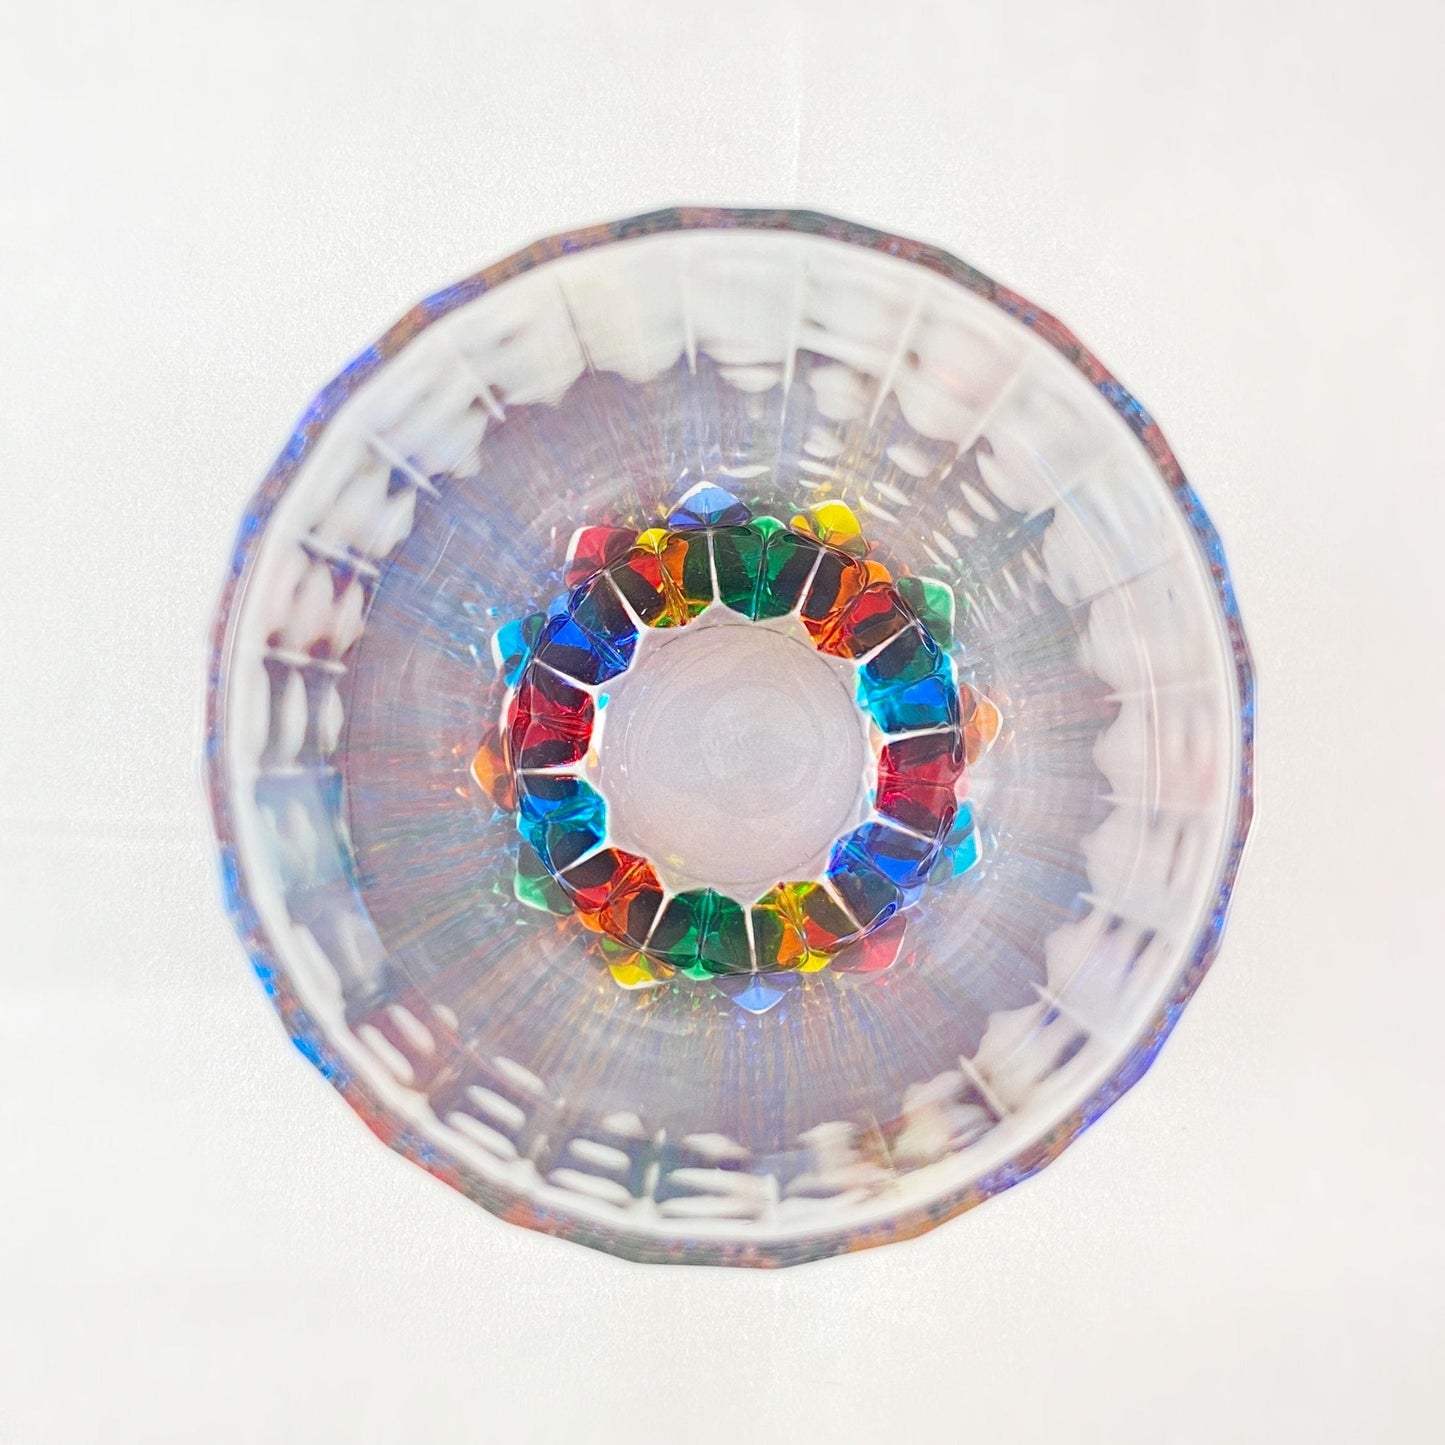 Adagio Clarity Highball Iced Tea Venetian Glass - Handmade in Italy, Colorful Murano Glass